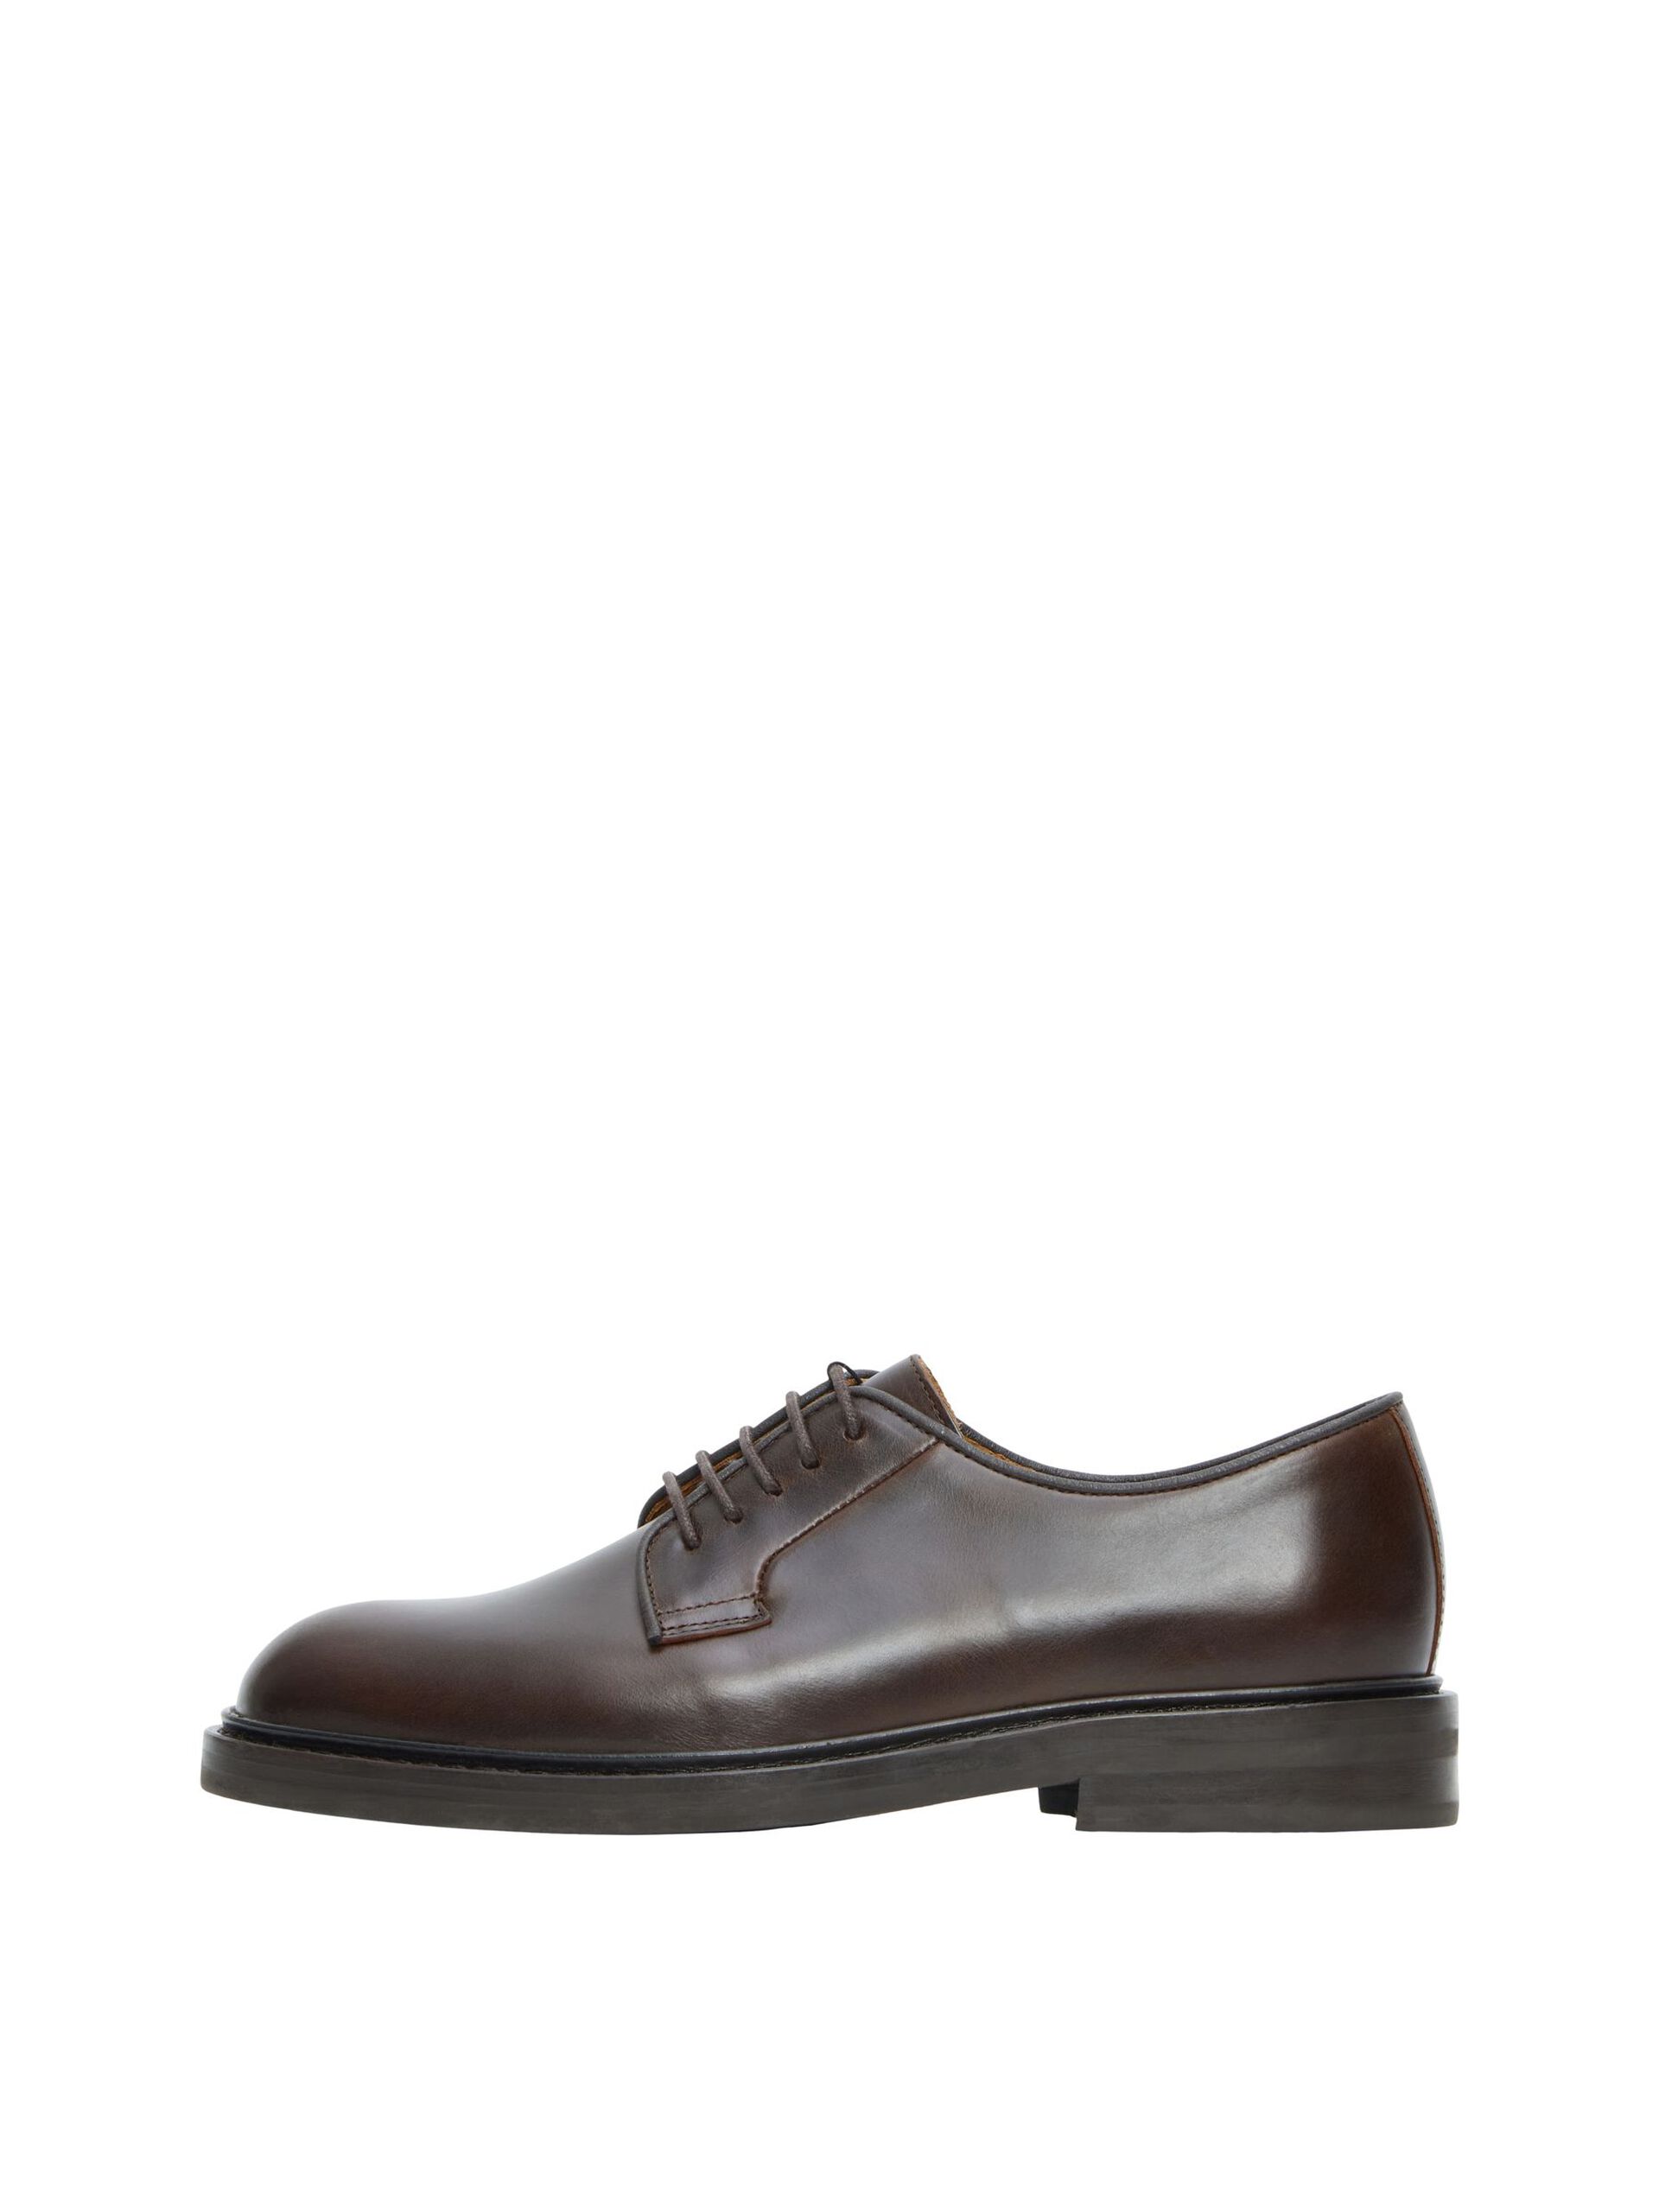 Carter Leather Blucher Shoe